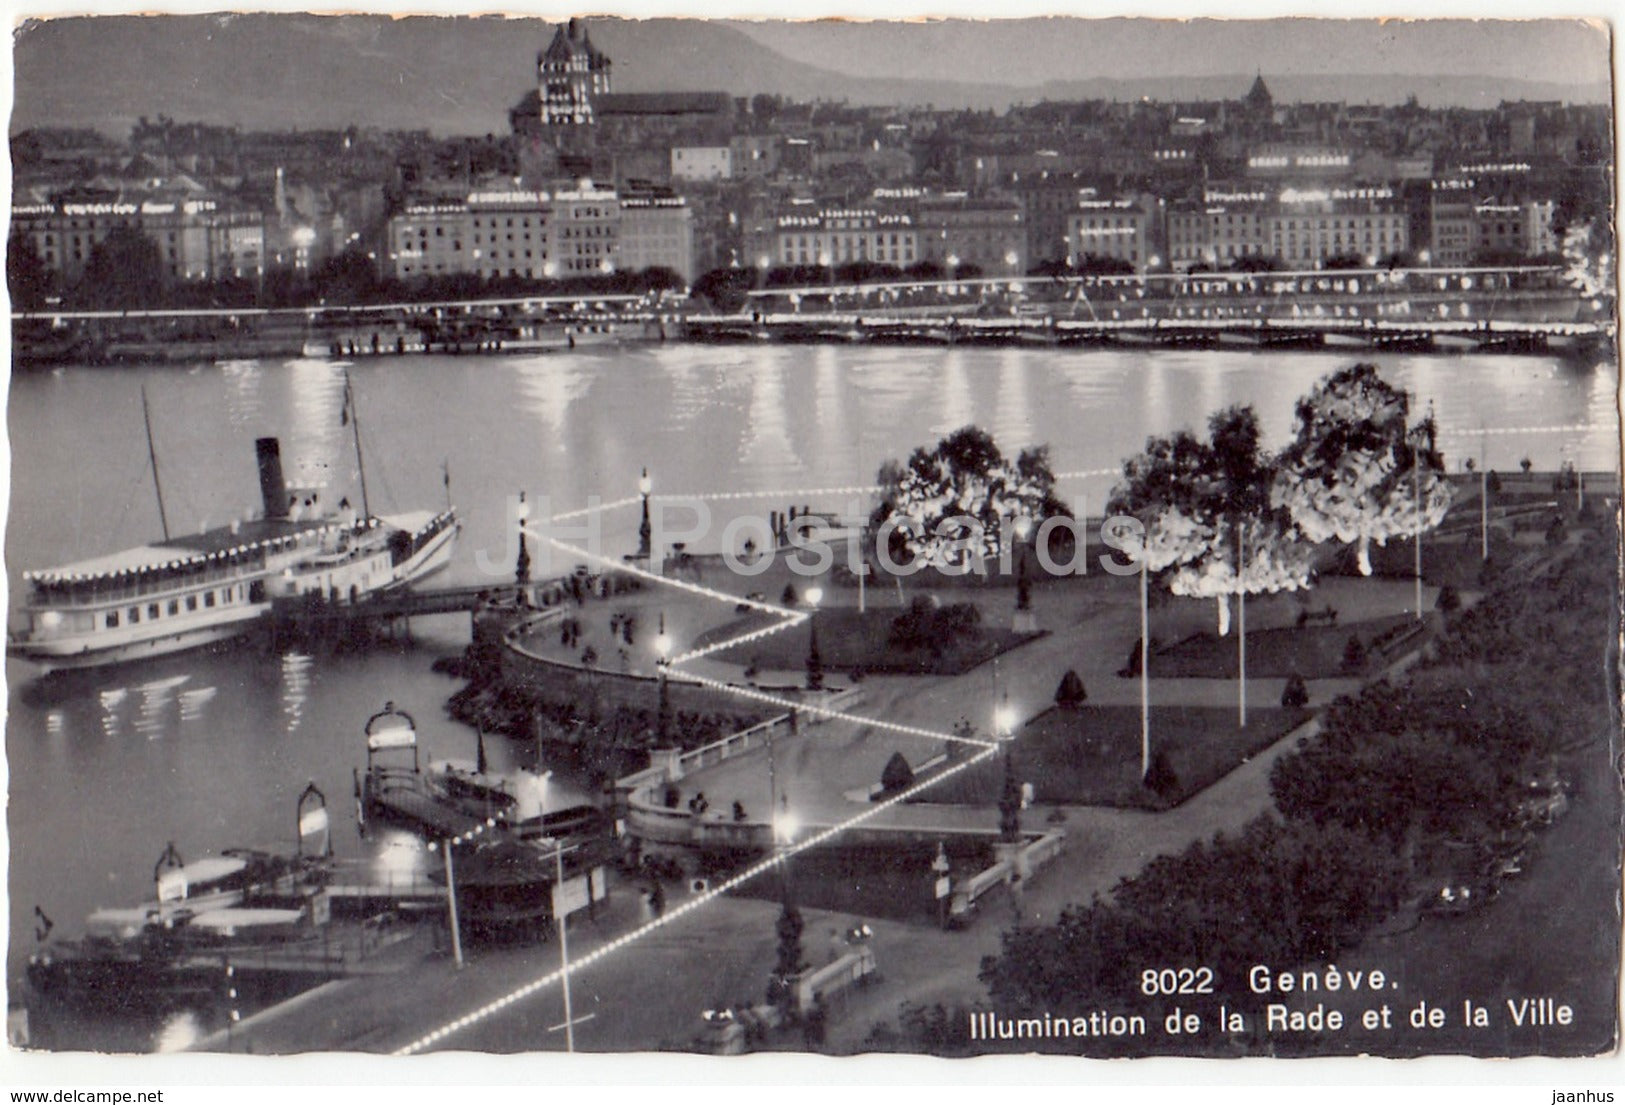 Geneve - Geneva - Illumination de la Rade et de la Ville - boat - 8022 - Switzerland - unused - JH Postcards